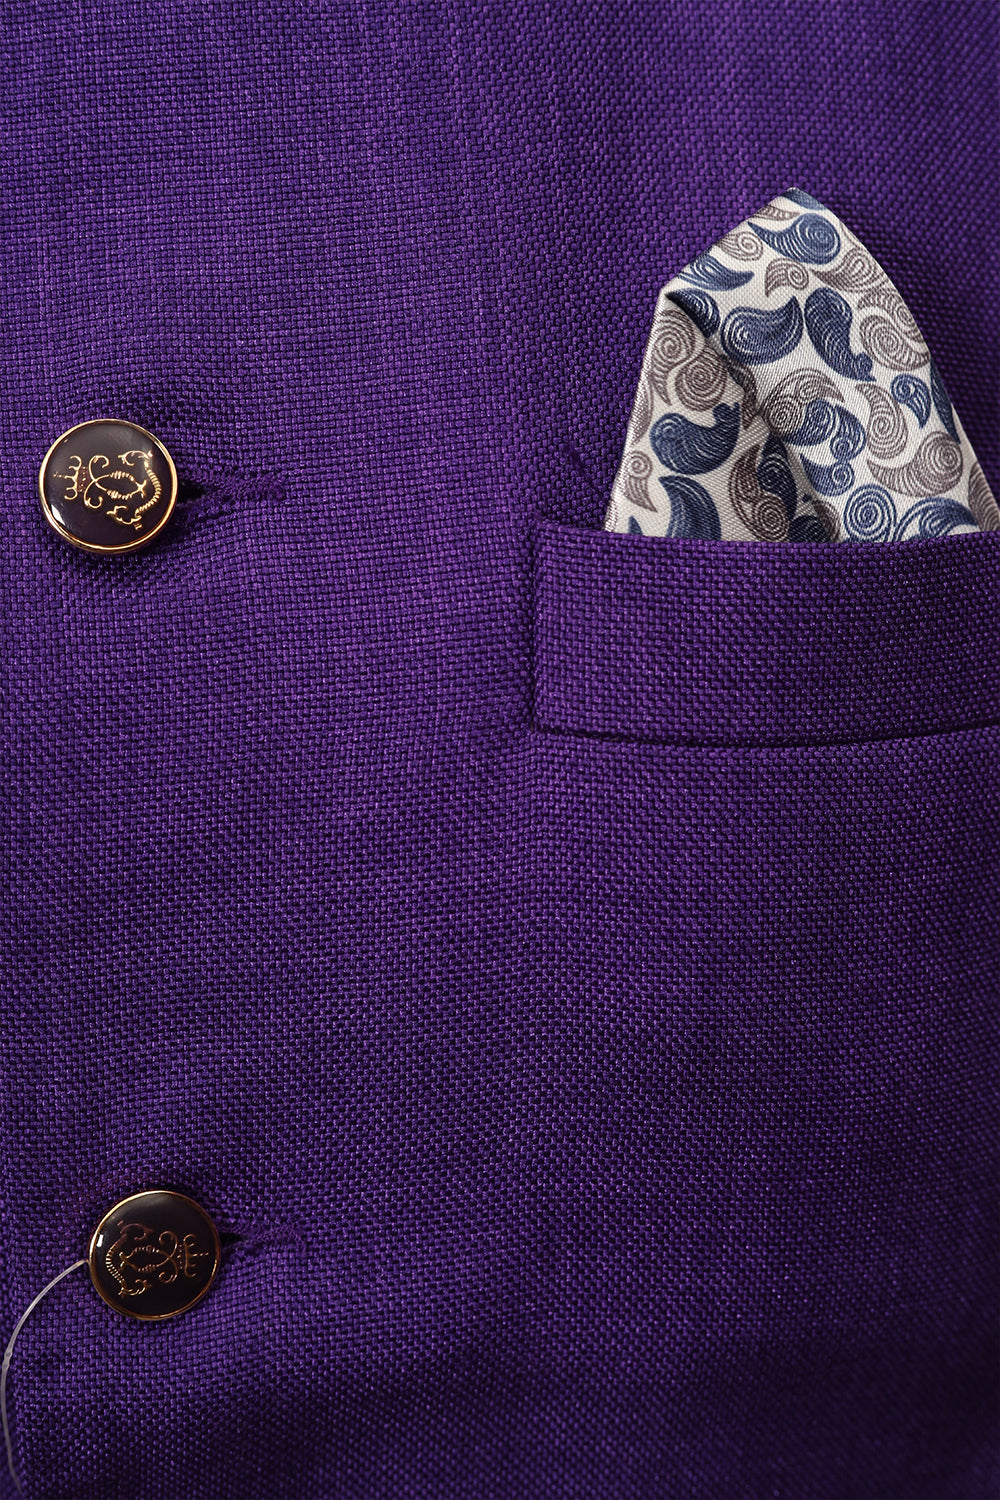 Violet silk Modi coat (Size-M)